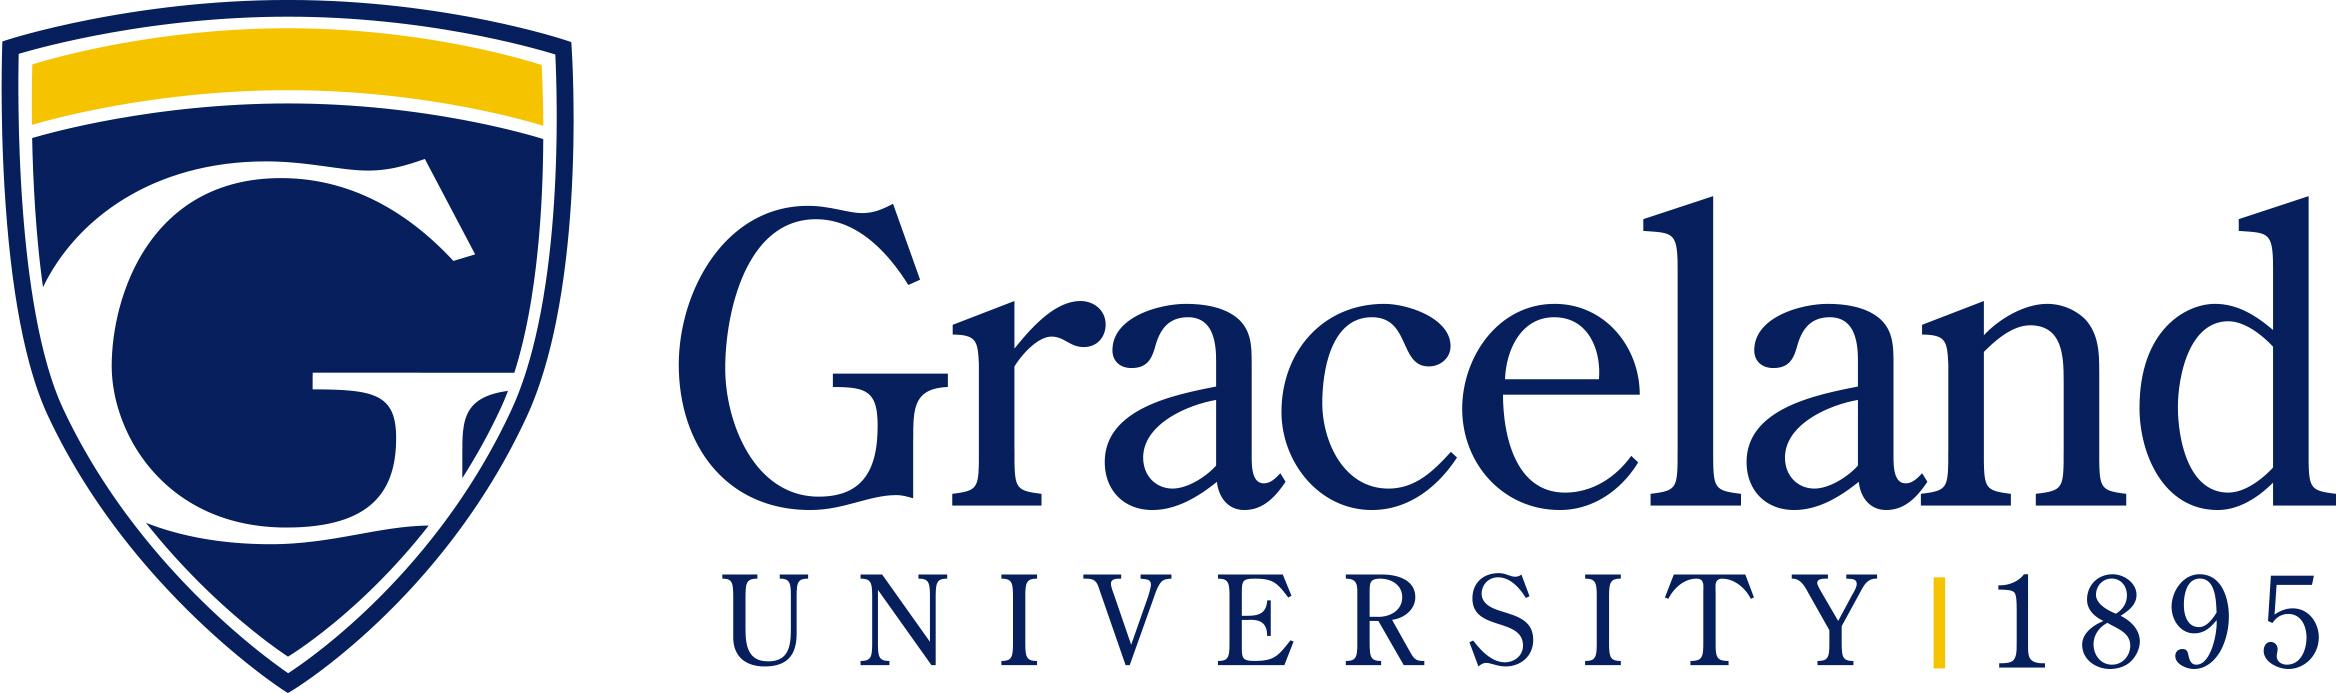 University Shield Logo - Visual Identity - Main View | The Graceland Identity ...